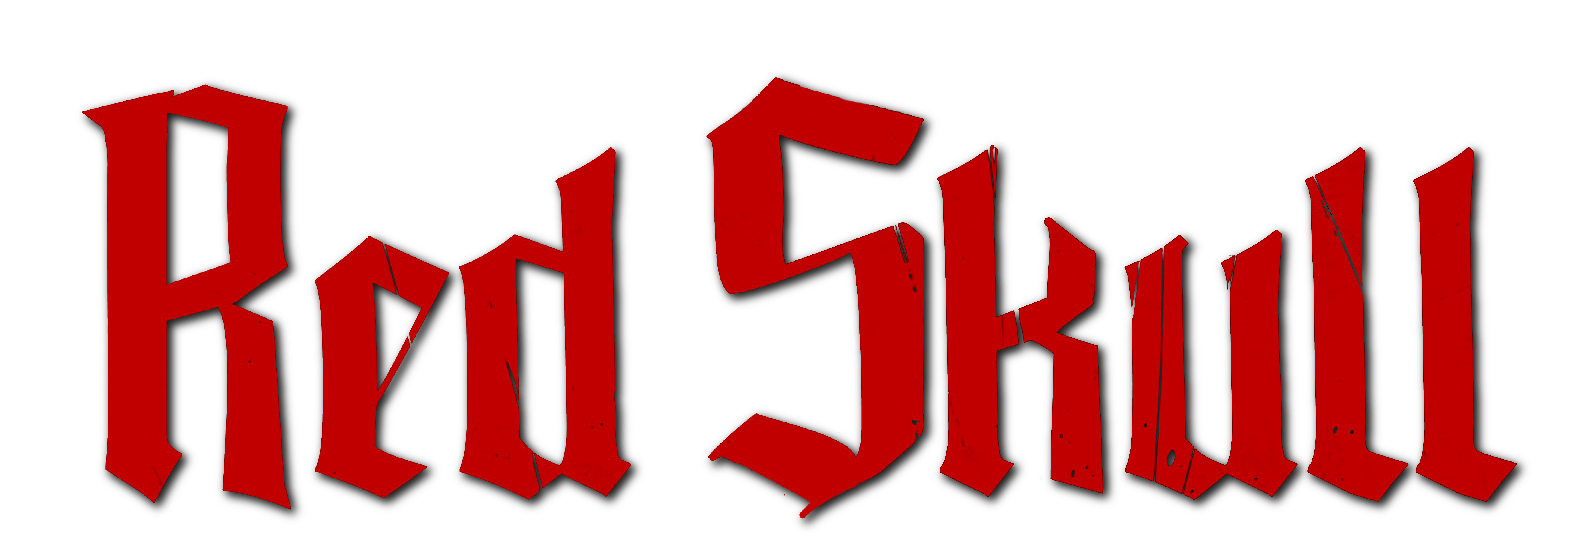 Red Skull Logo - Red Skull | LOGO Comics Wiki | FANDOM powered by Wikia